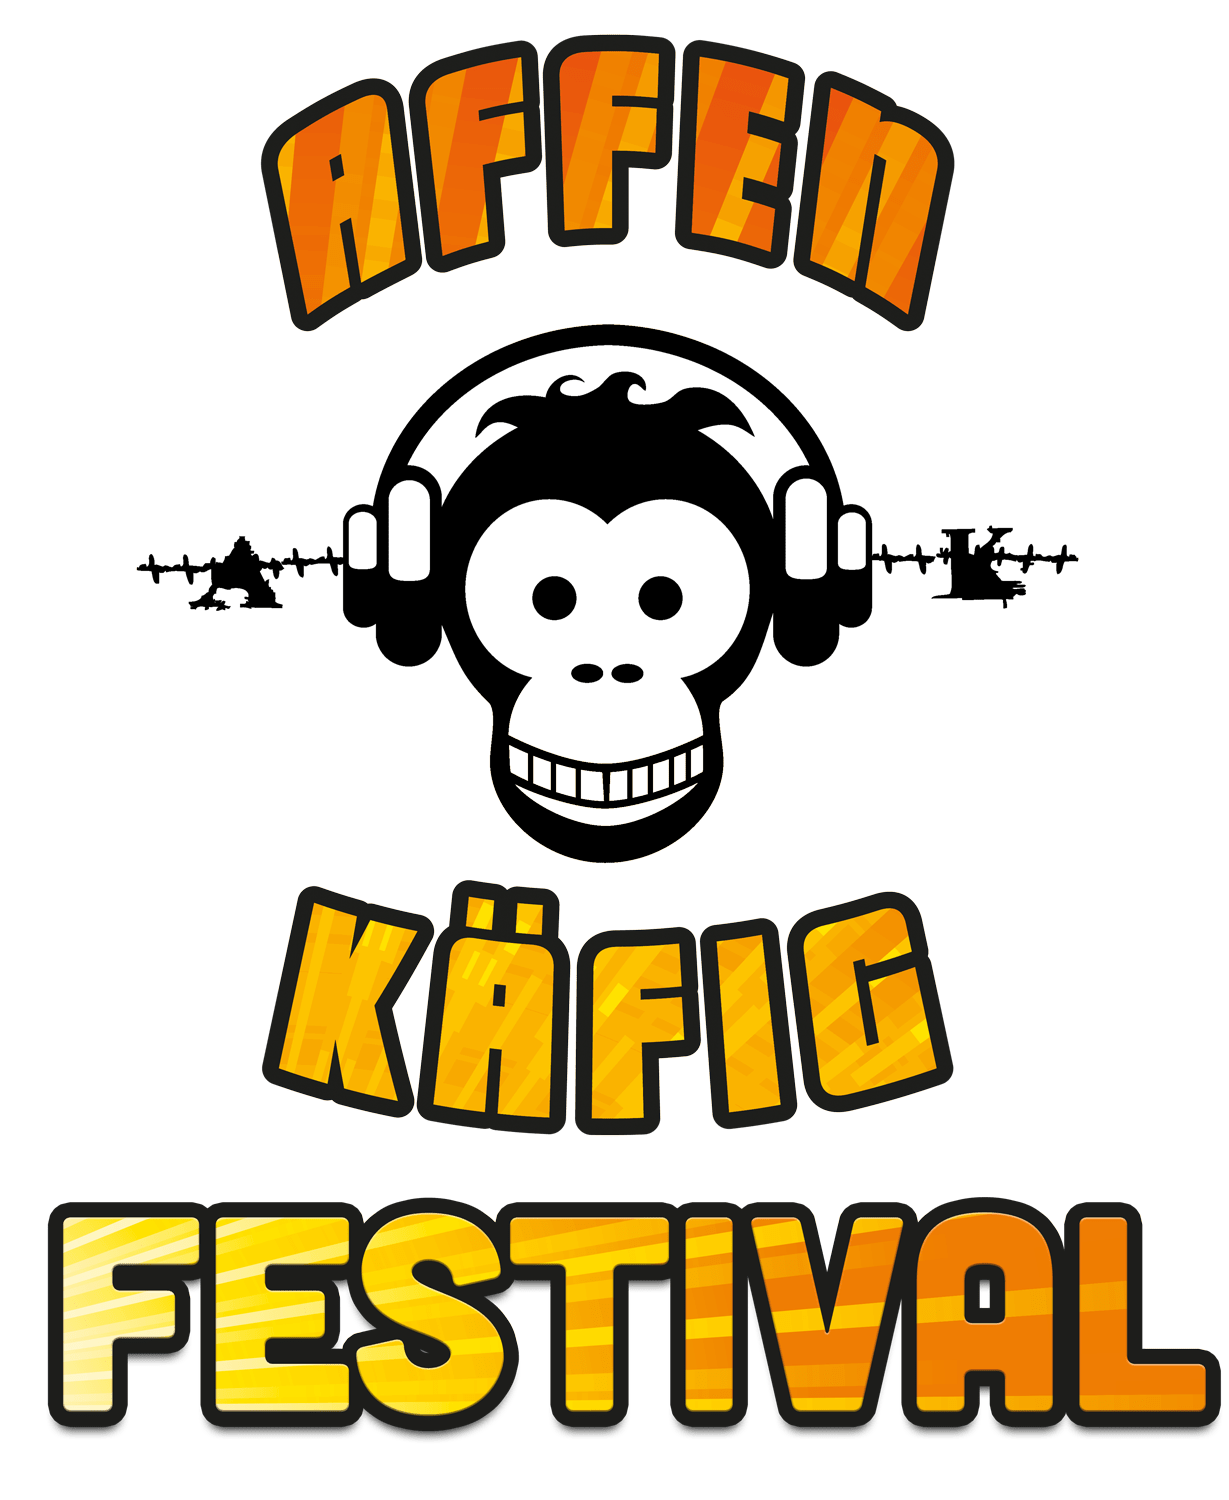 Affenkäfig Festival 2024 in Mendig